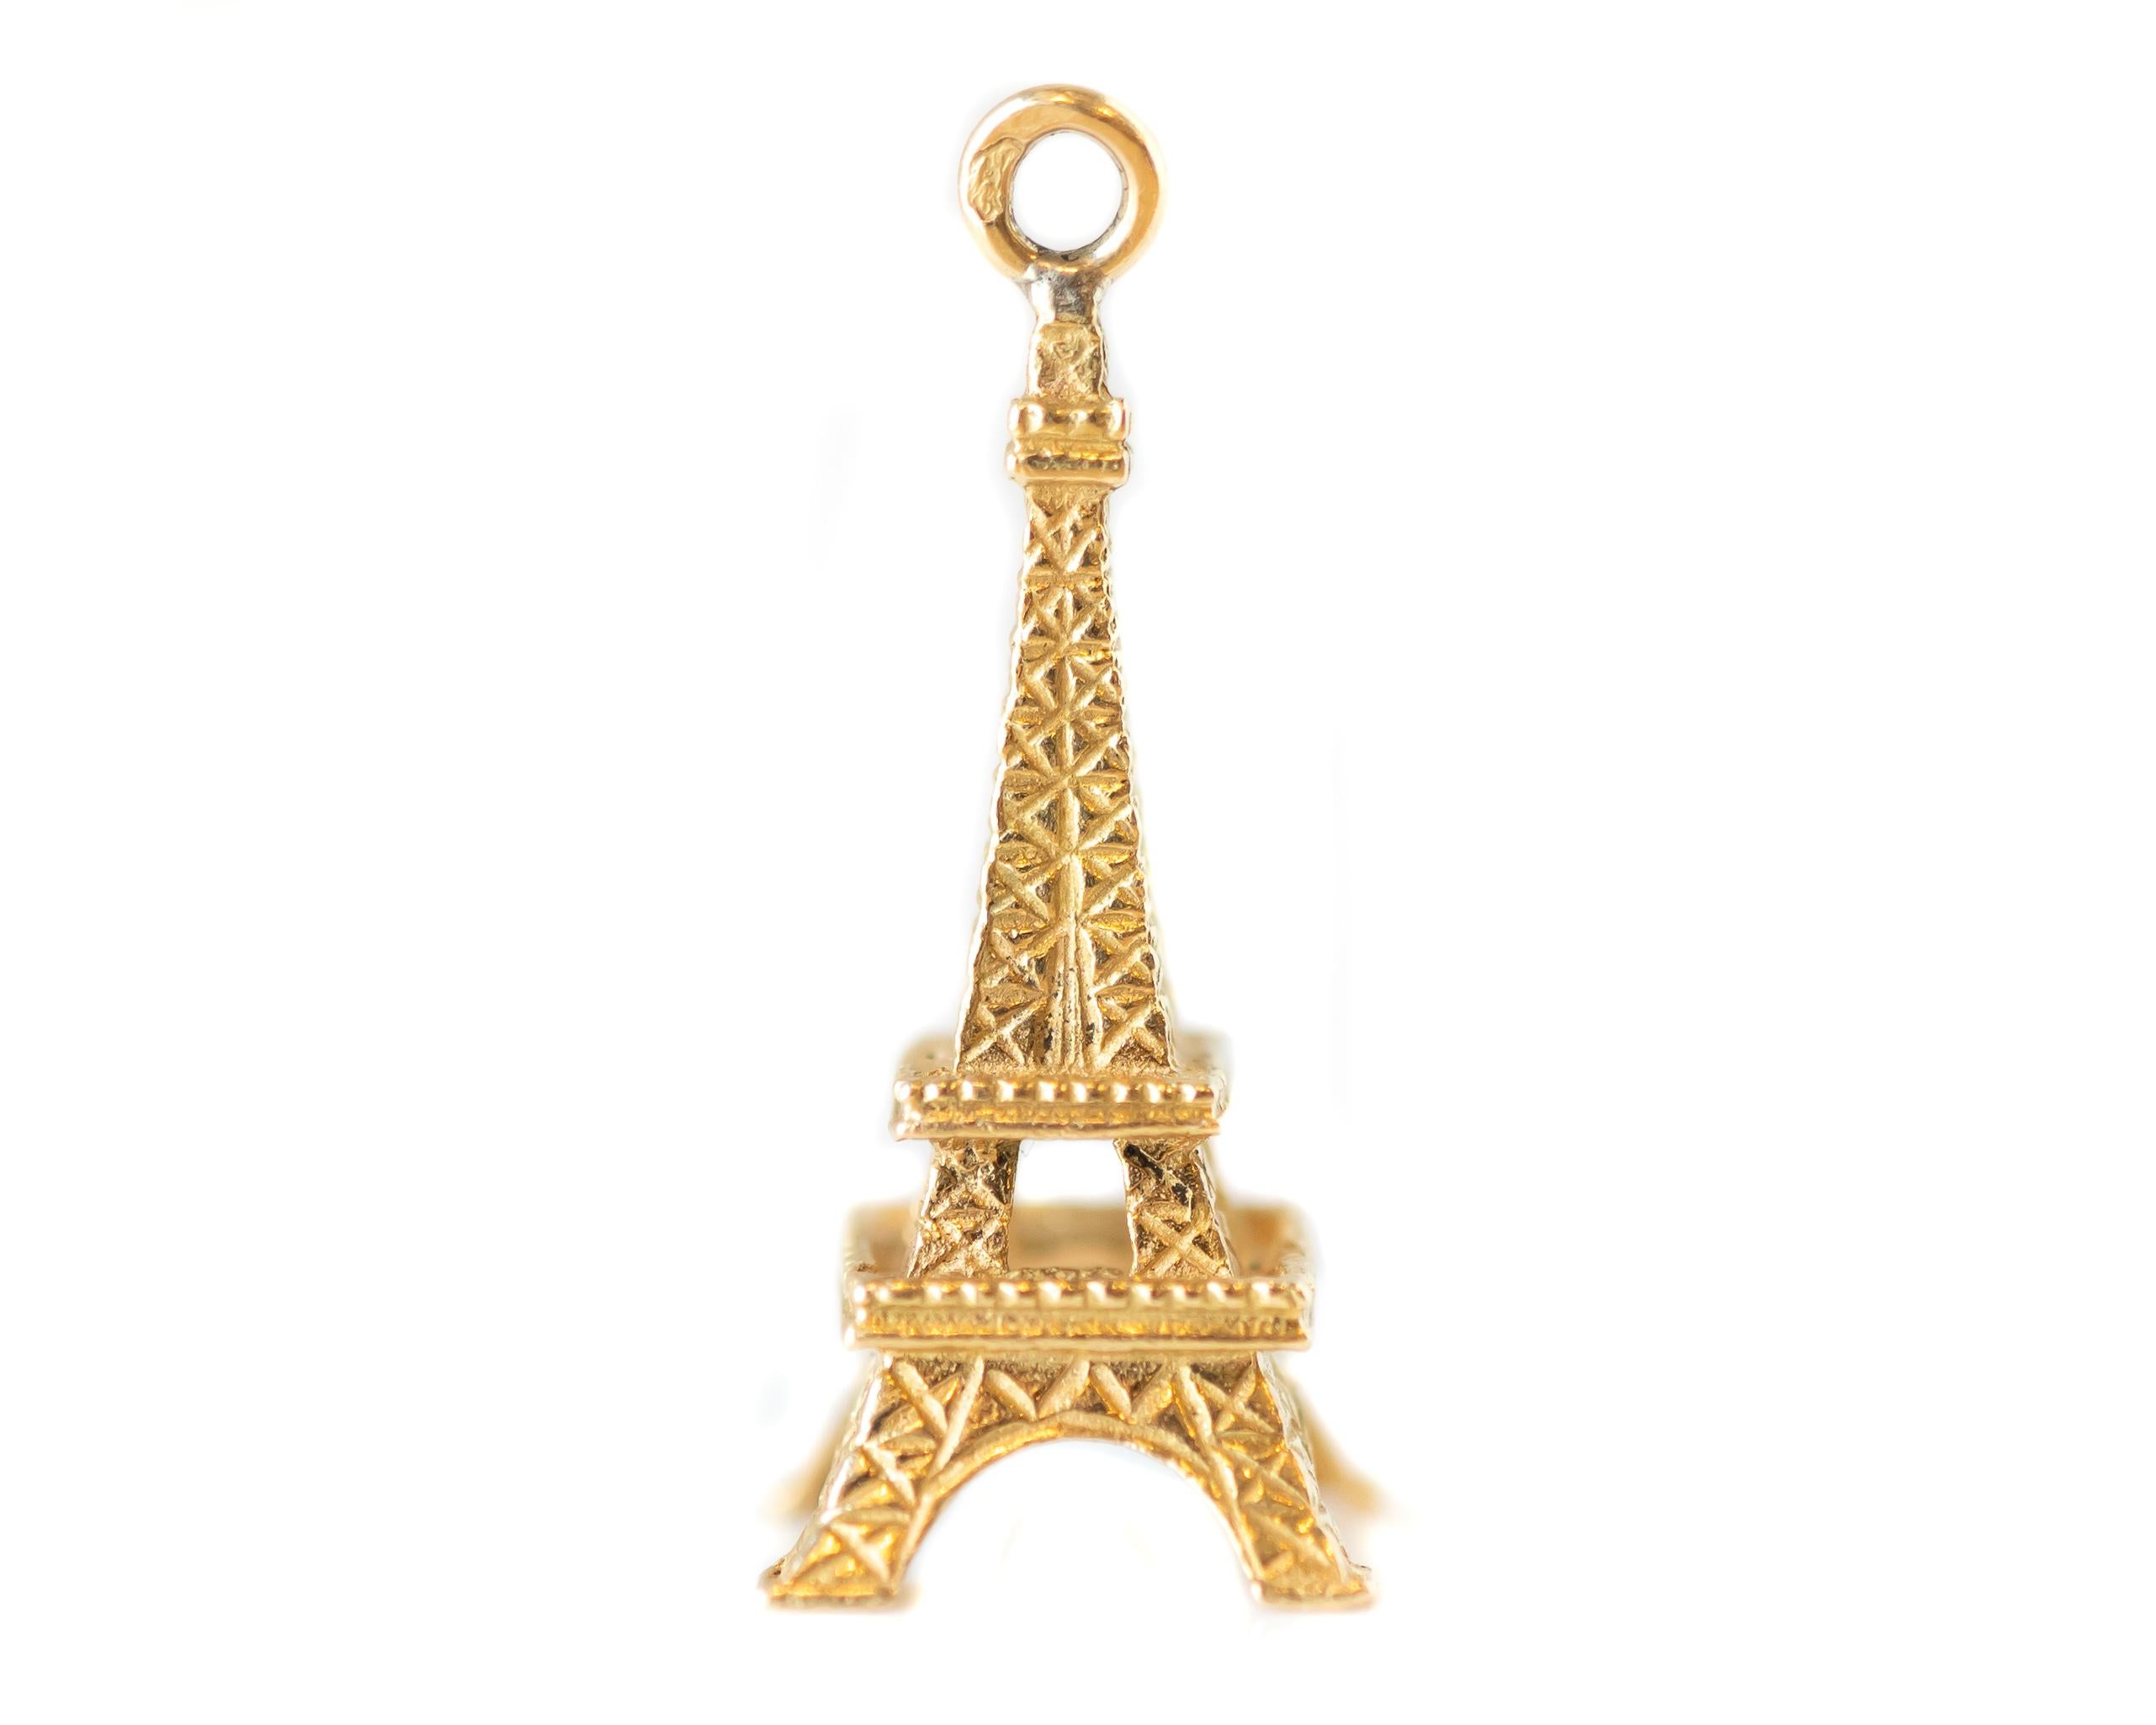 Retro 1950s Eiffel Tower Charm in 14 Karat Yellow Gold